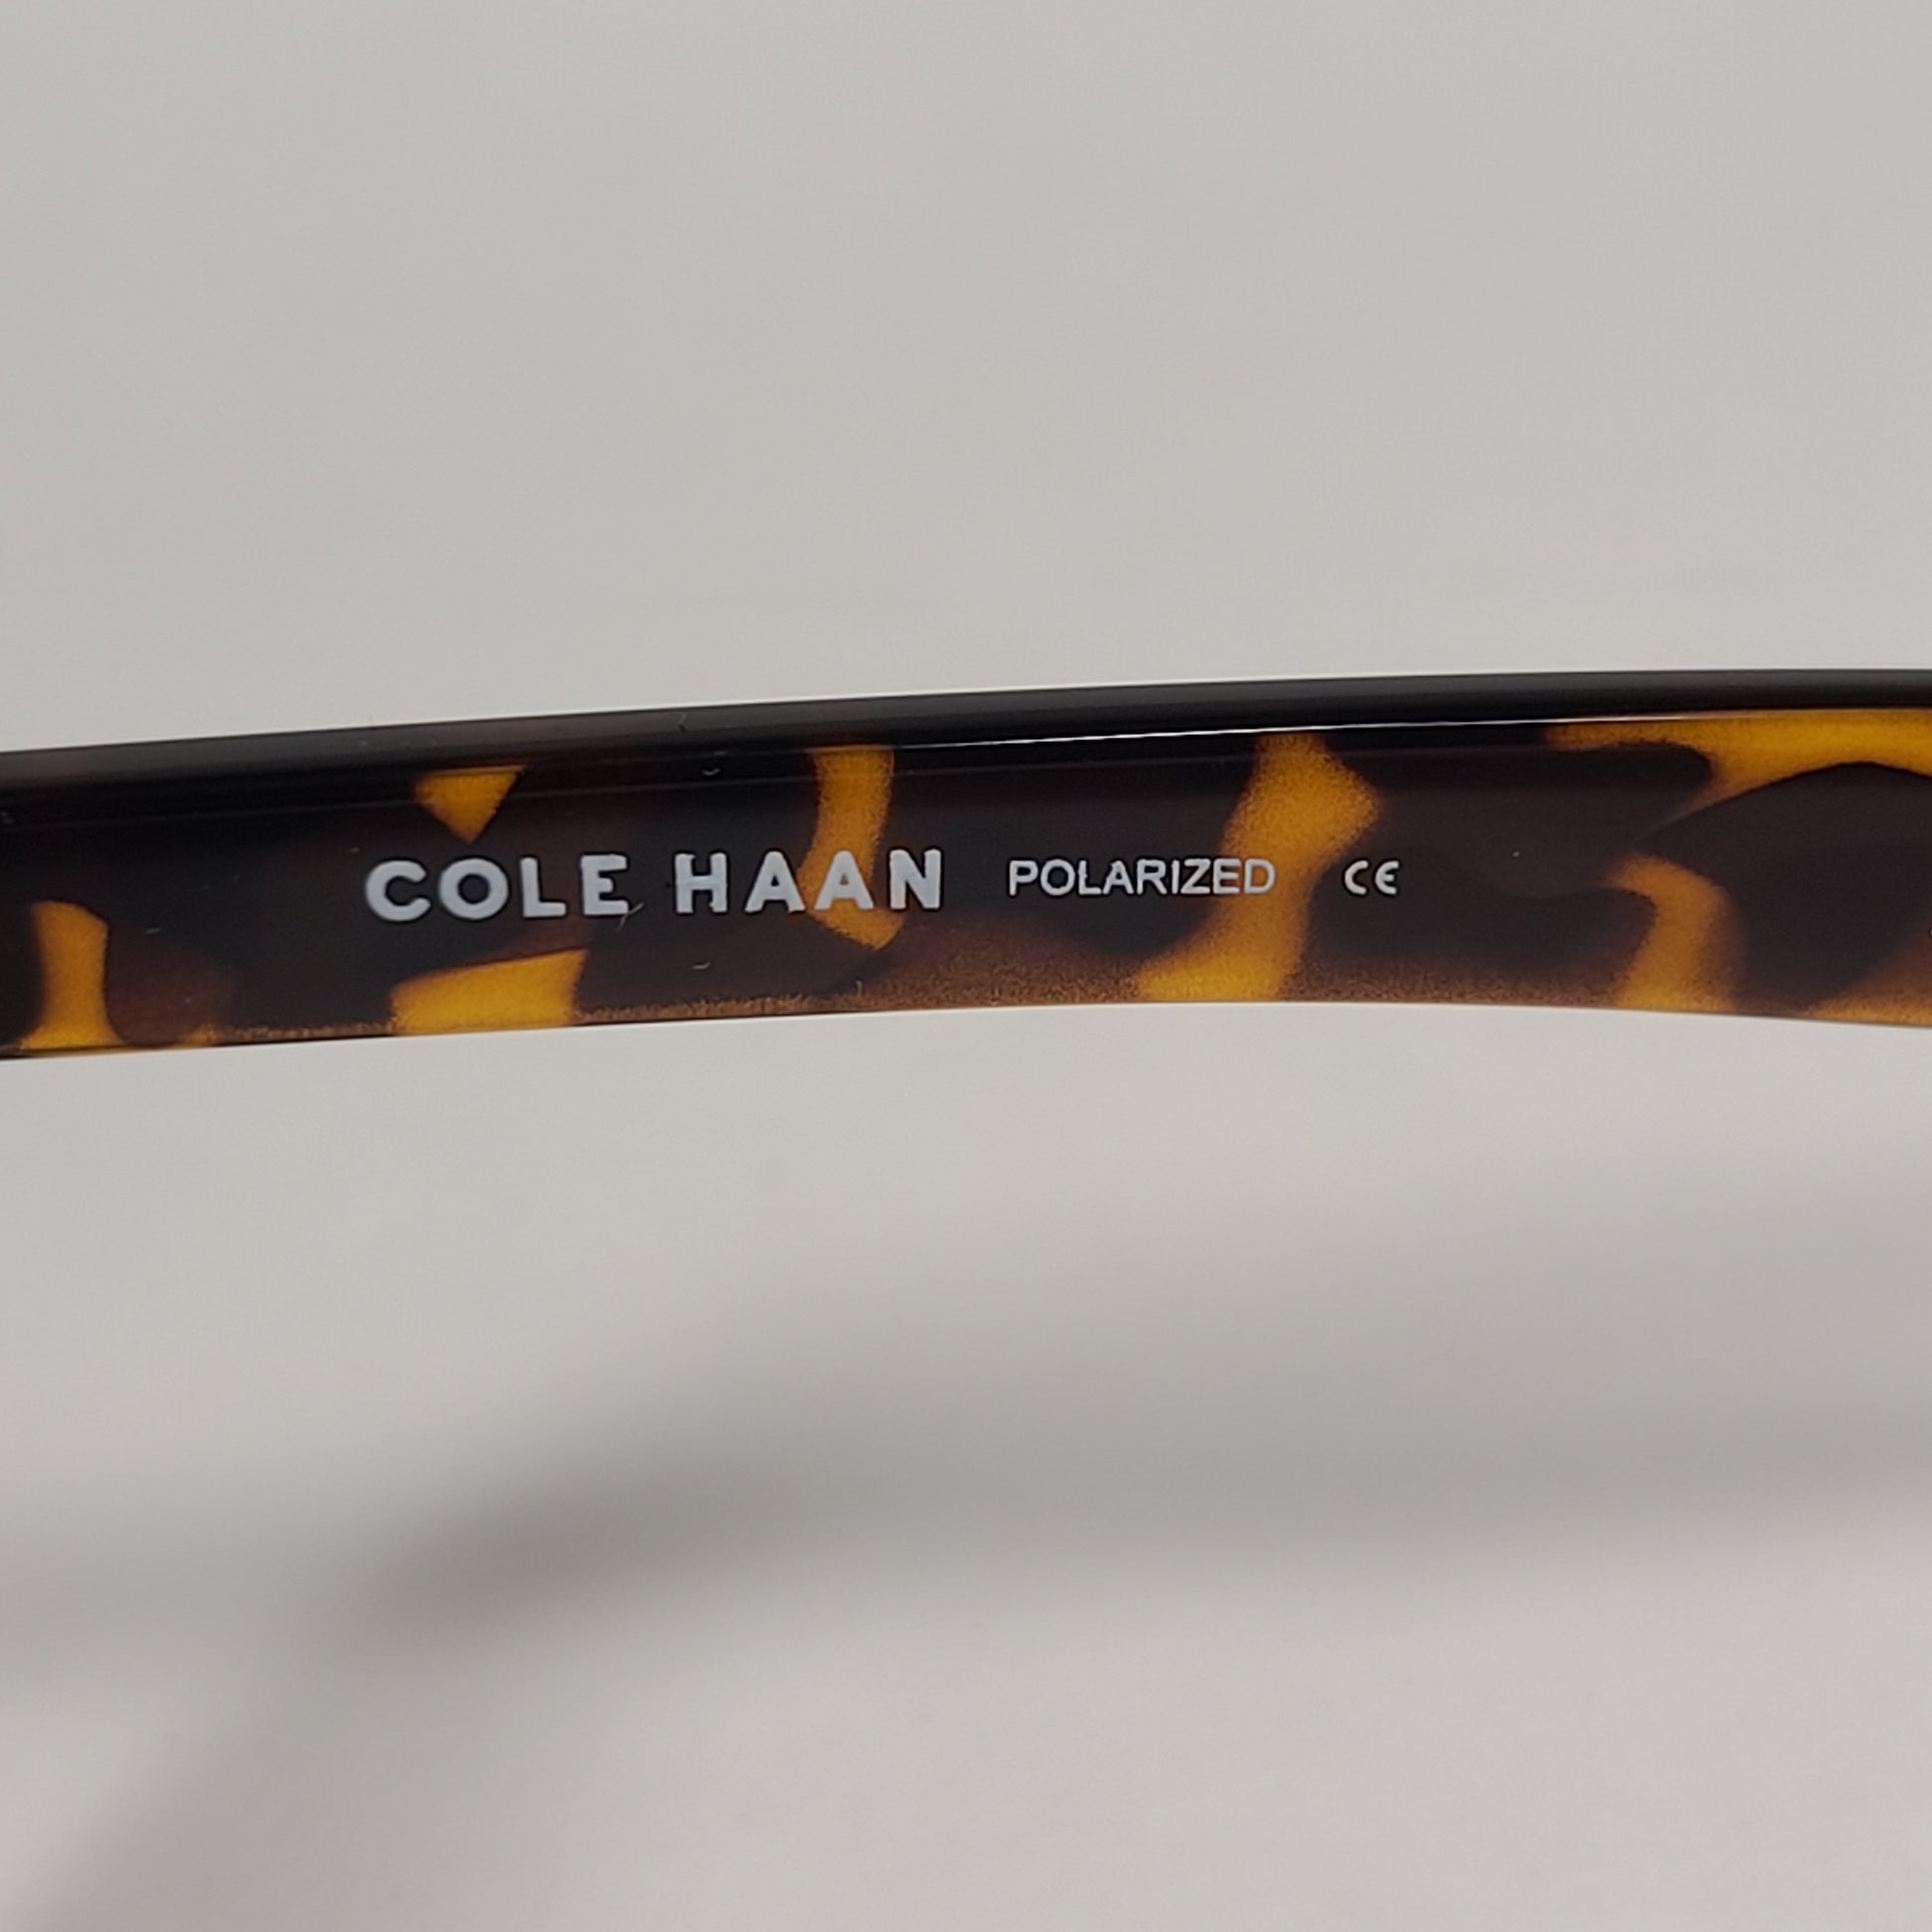 Cole Haan CH8506 215 Polarized Sport Sunglasses Brown Tortoise Frame Brown Lens - Sunglasses